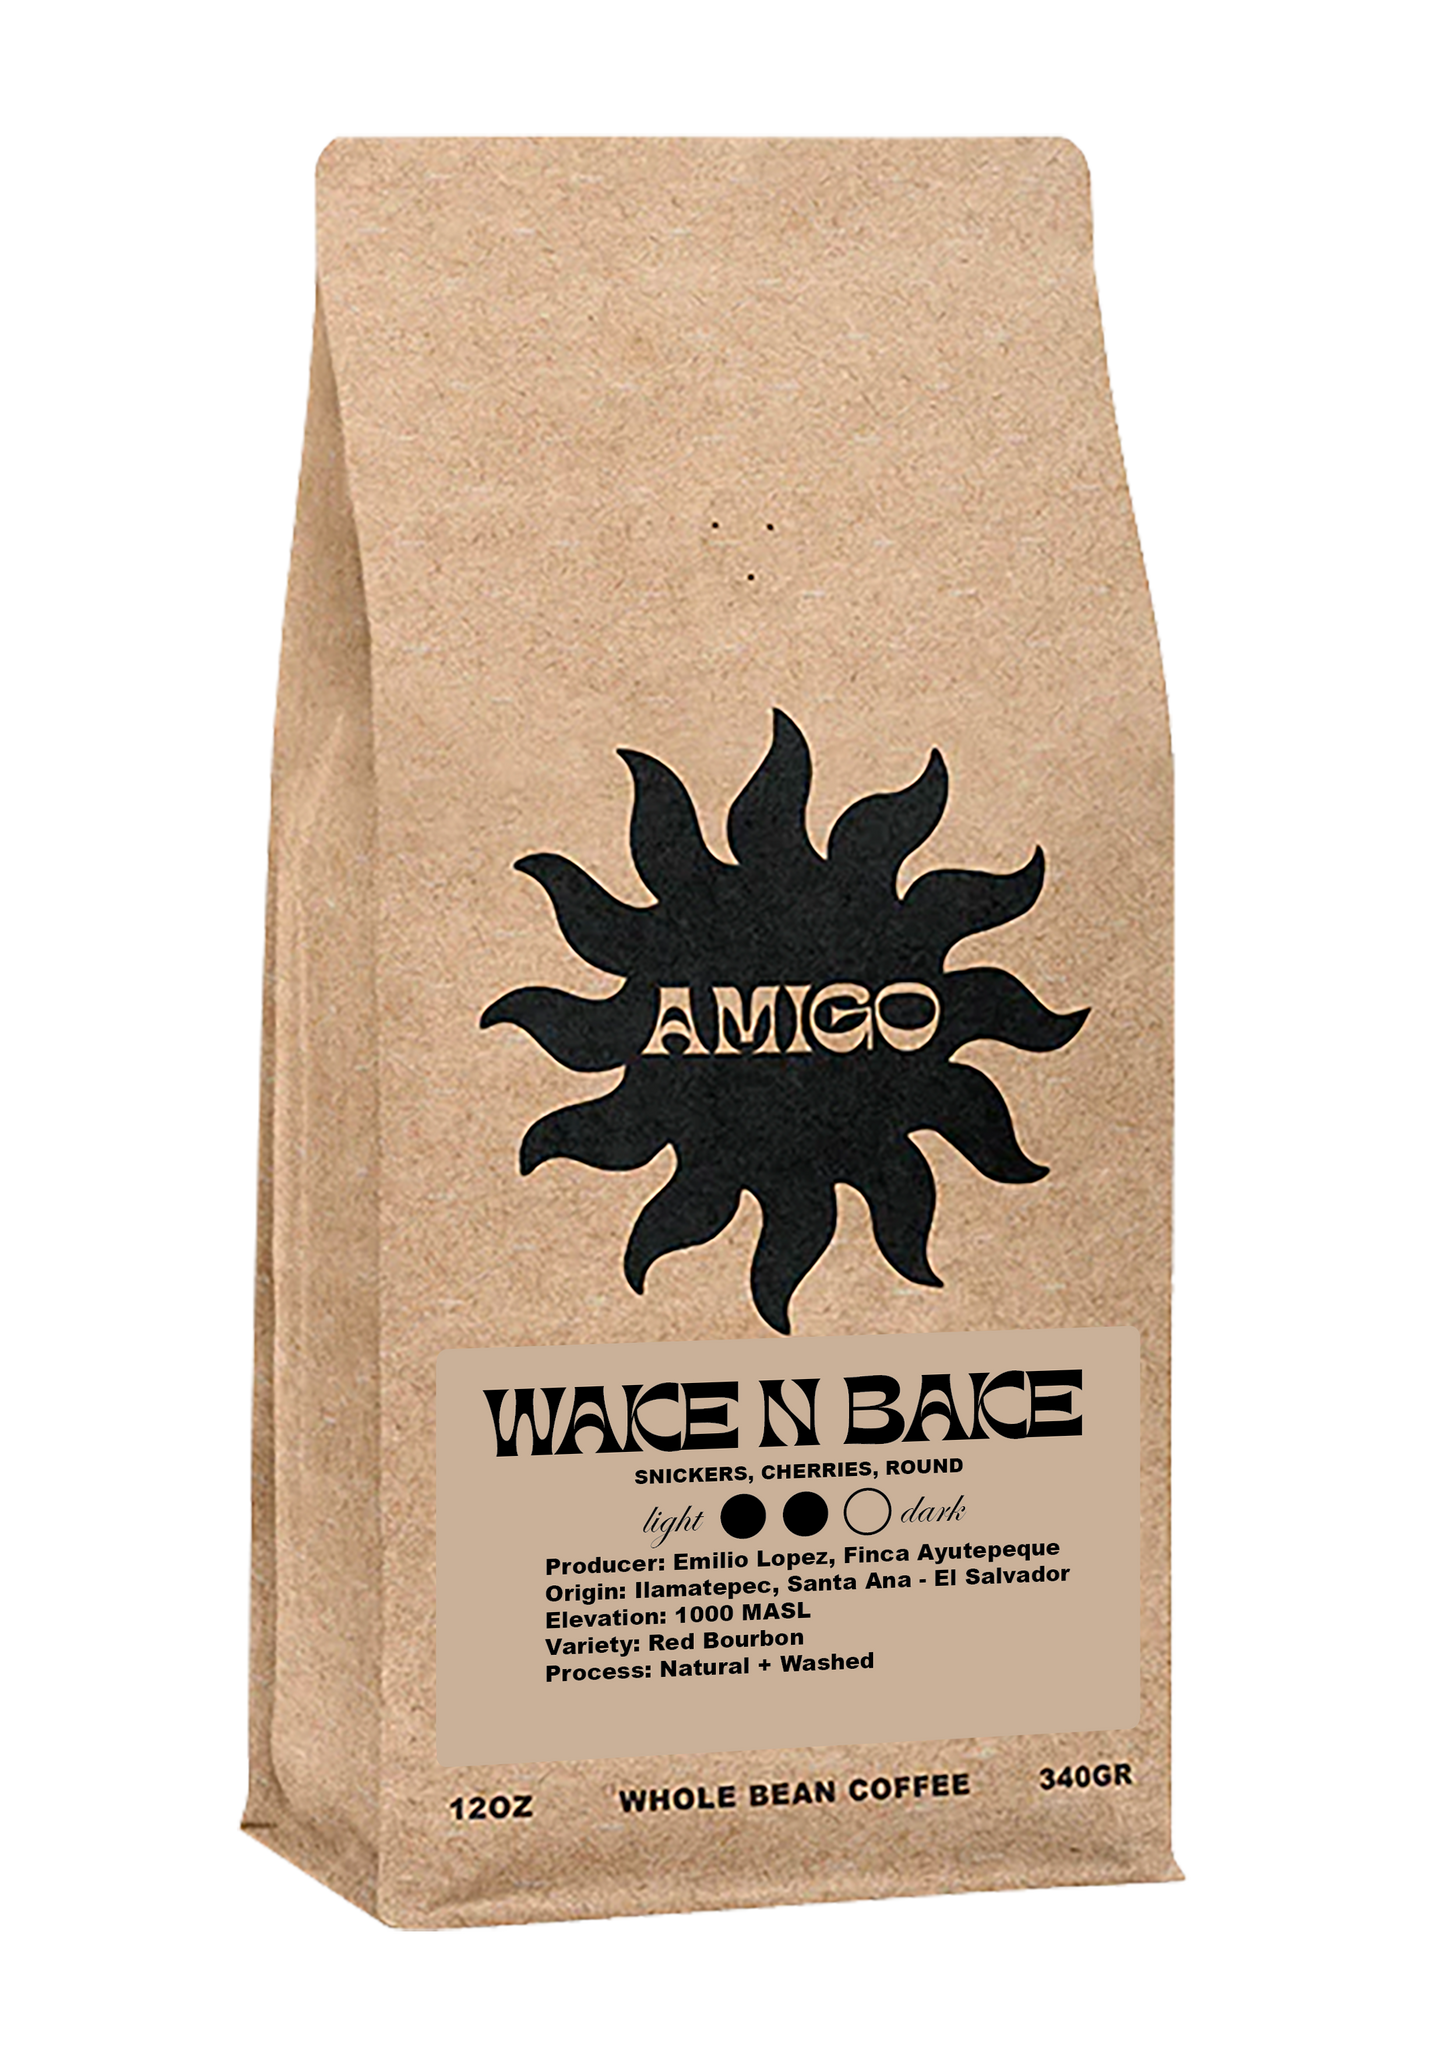 A bag of Wake and Bake coffee beans